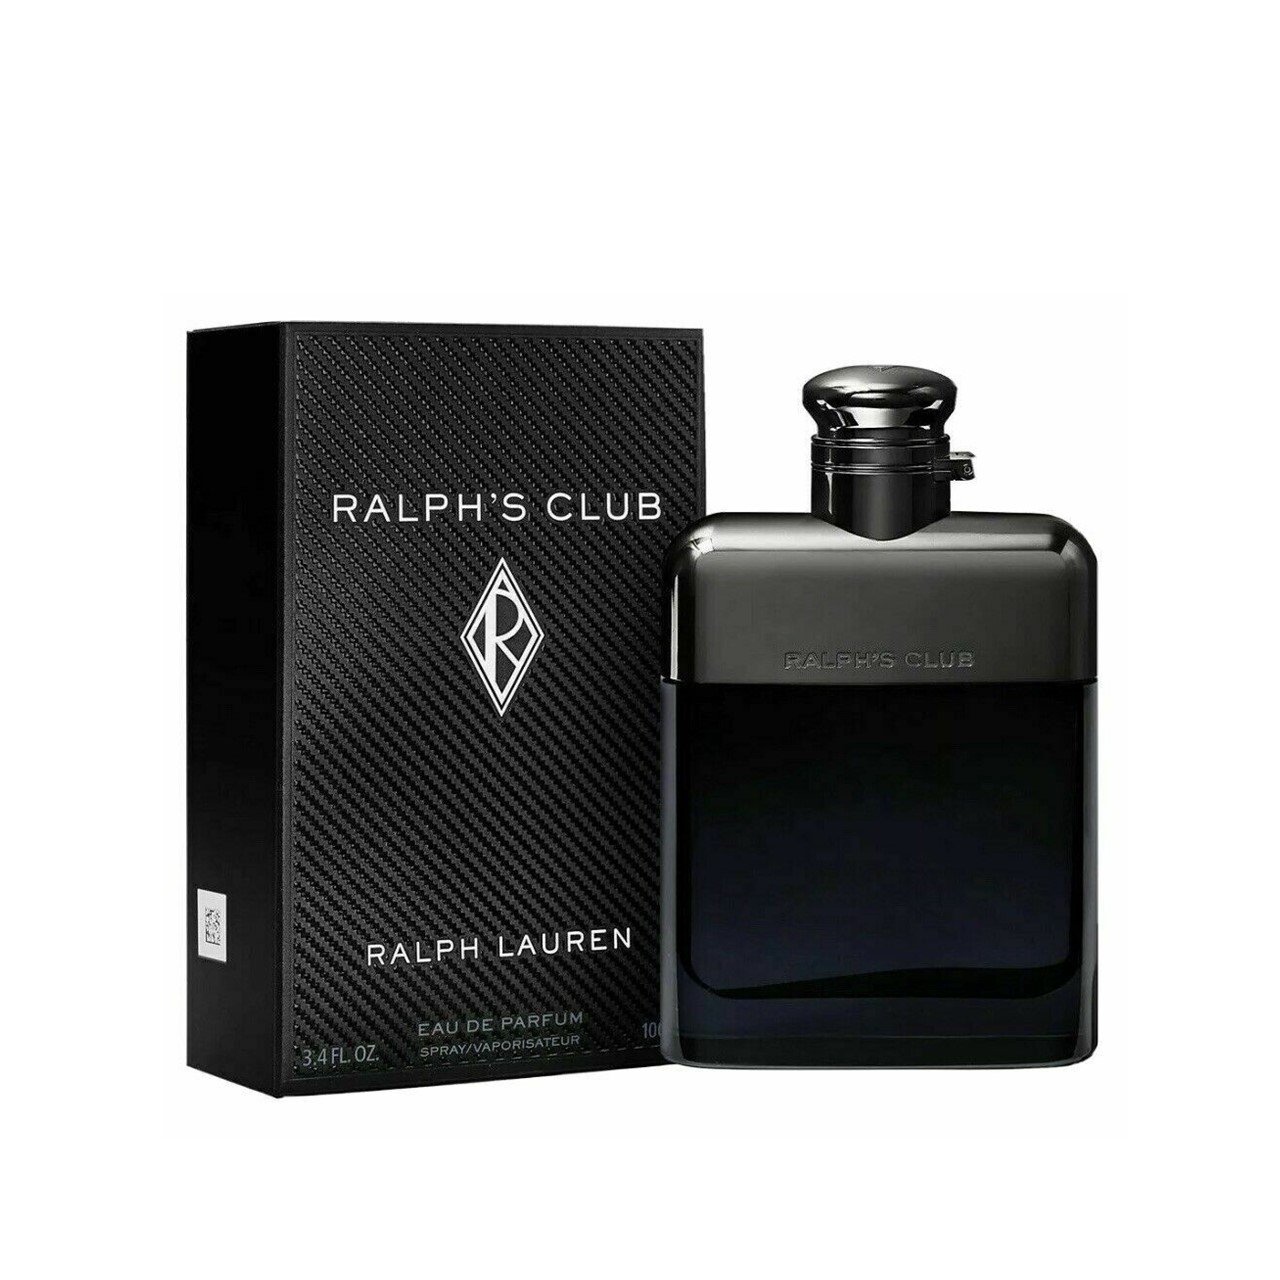 https://static.beautytocare.com/cdn-cgi/image/width=1600,height=1600,f=auto/media/catalog/product//r/a/ralph-lauren-ralph-s-club-eau-de-parfum-for-men-100ml.jpg